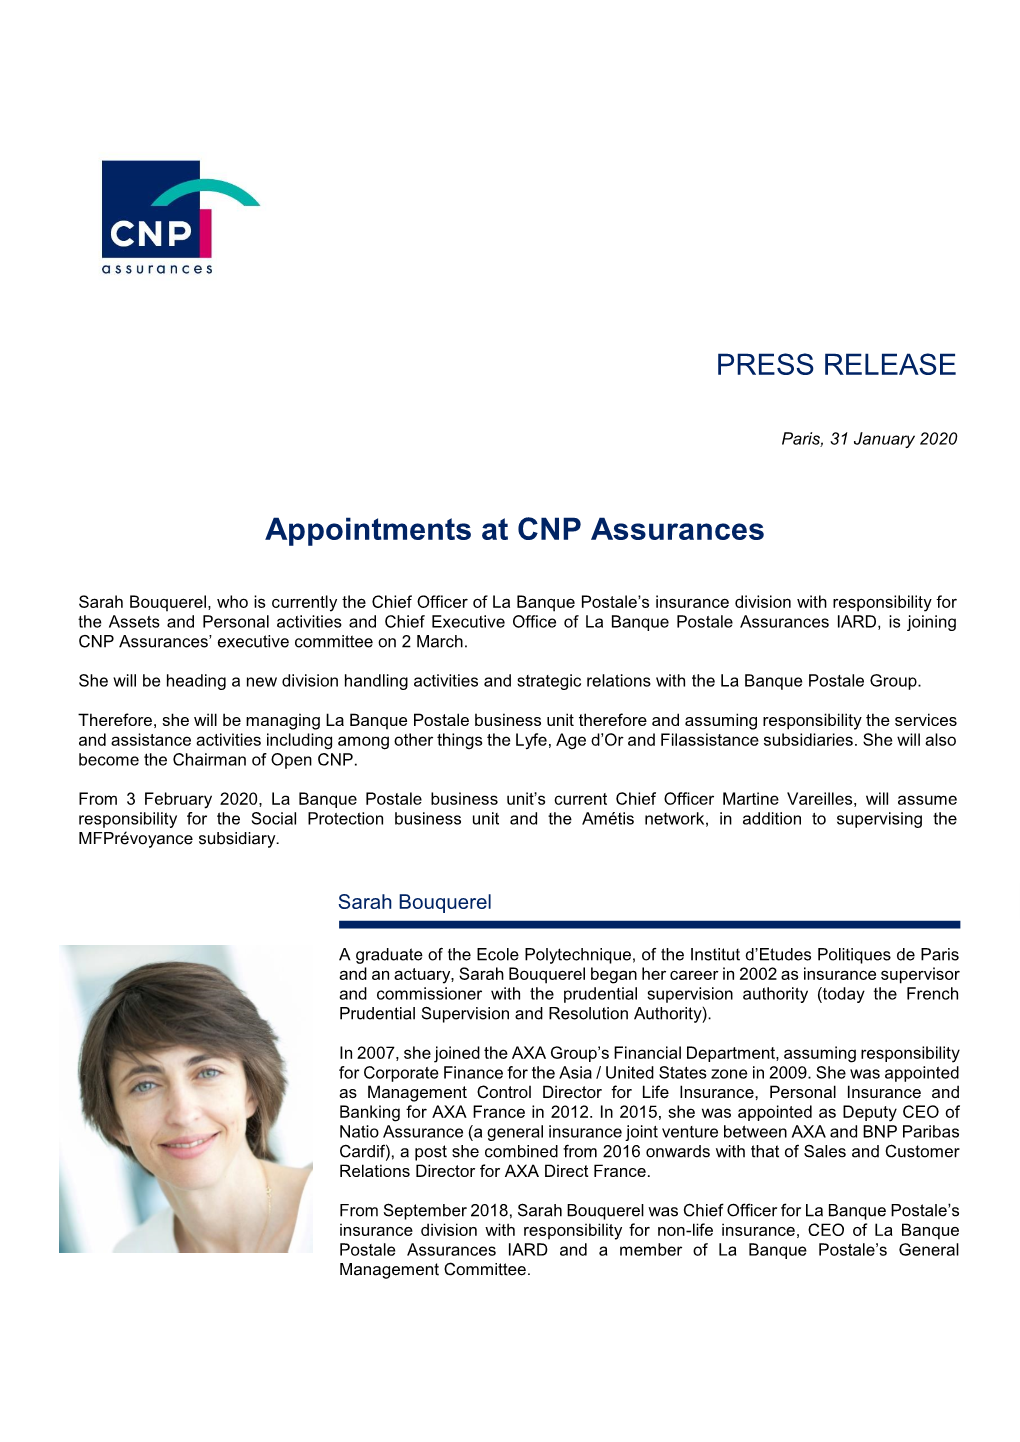 Appointments at CNP Assurances